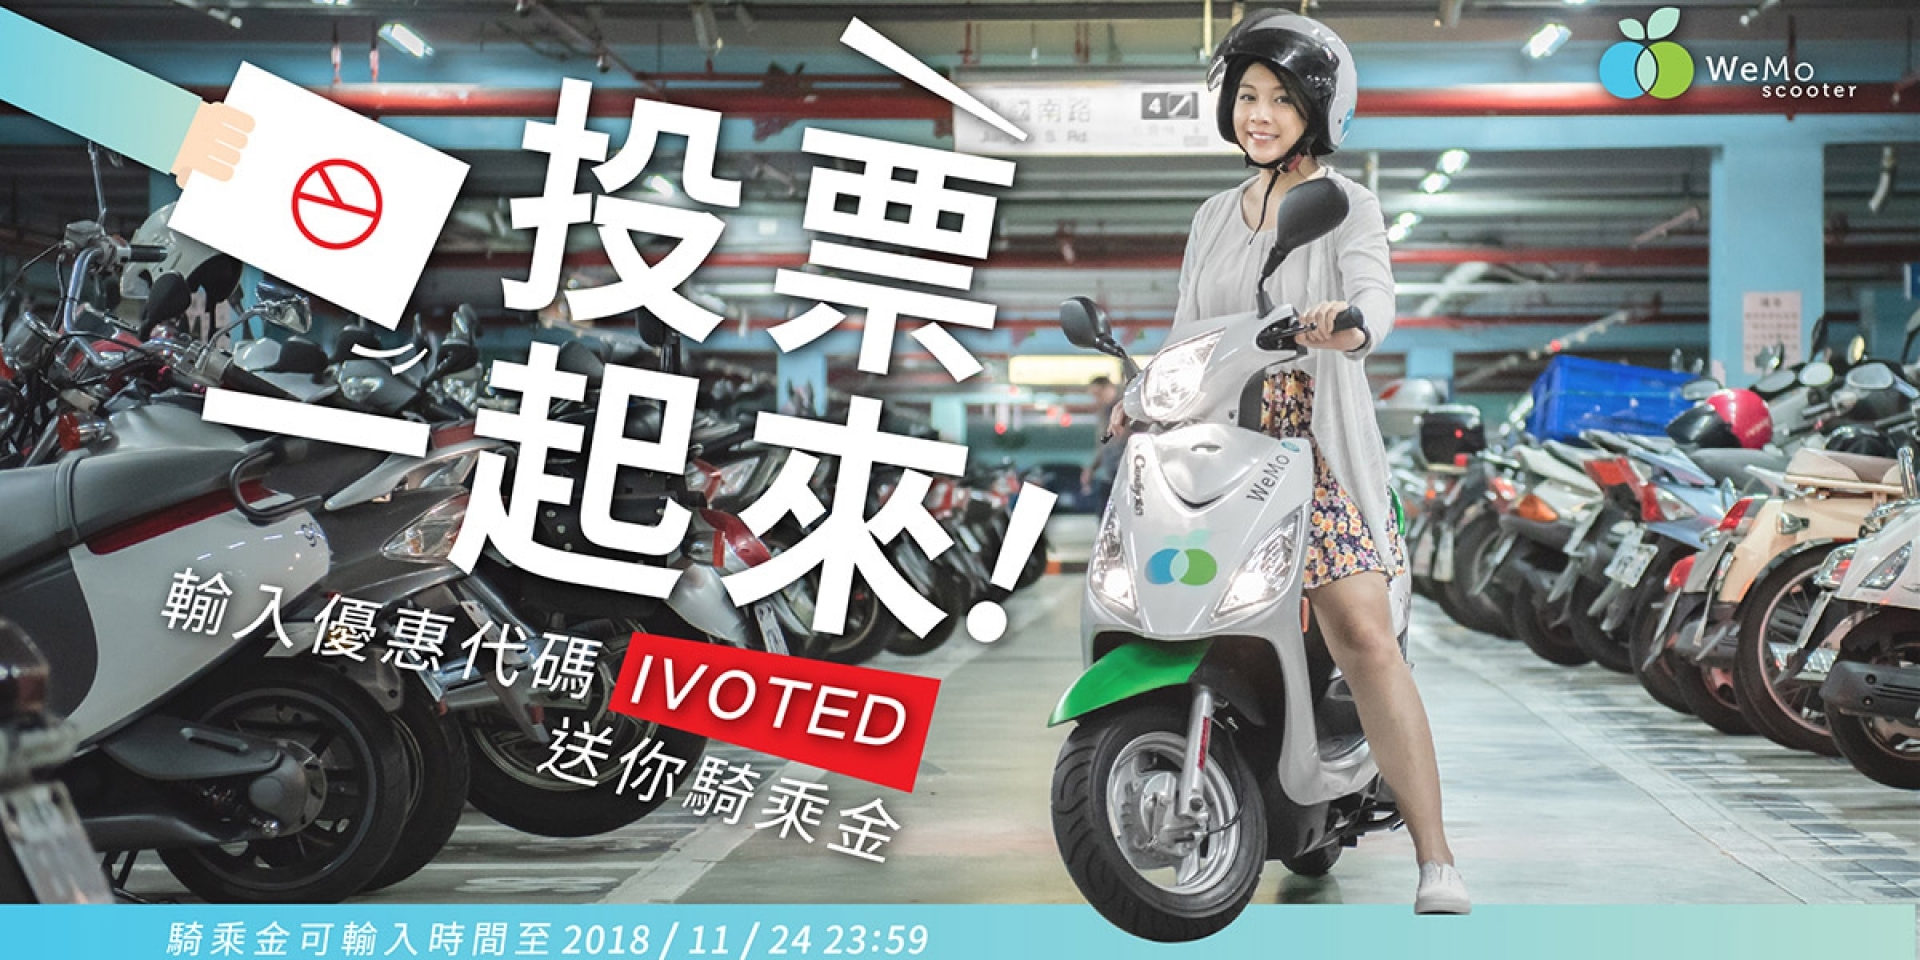 官方新聞稿。WeMo Scooter 鼓勵使用綠色運輸投票，下週起騎 WeMo Scooter抽大獎 iPhone XR